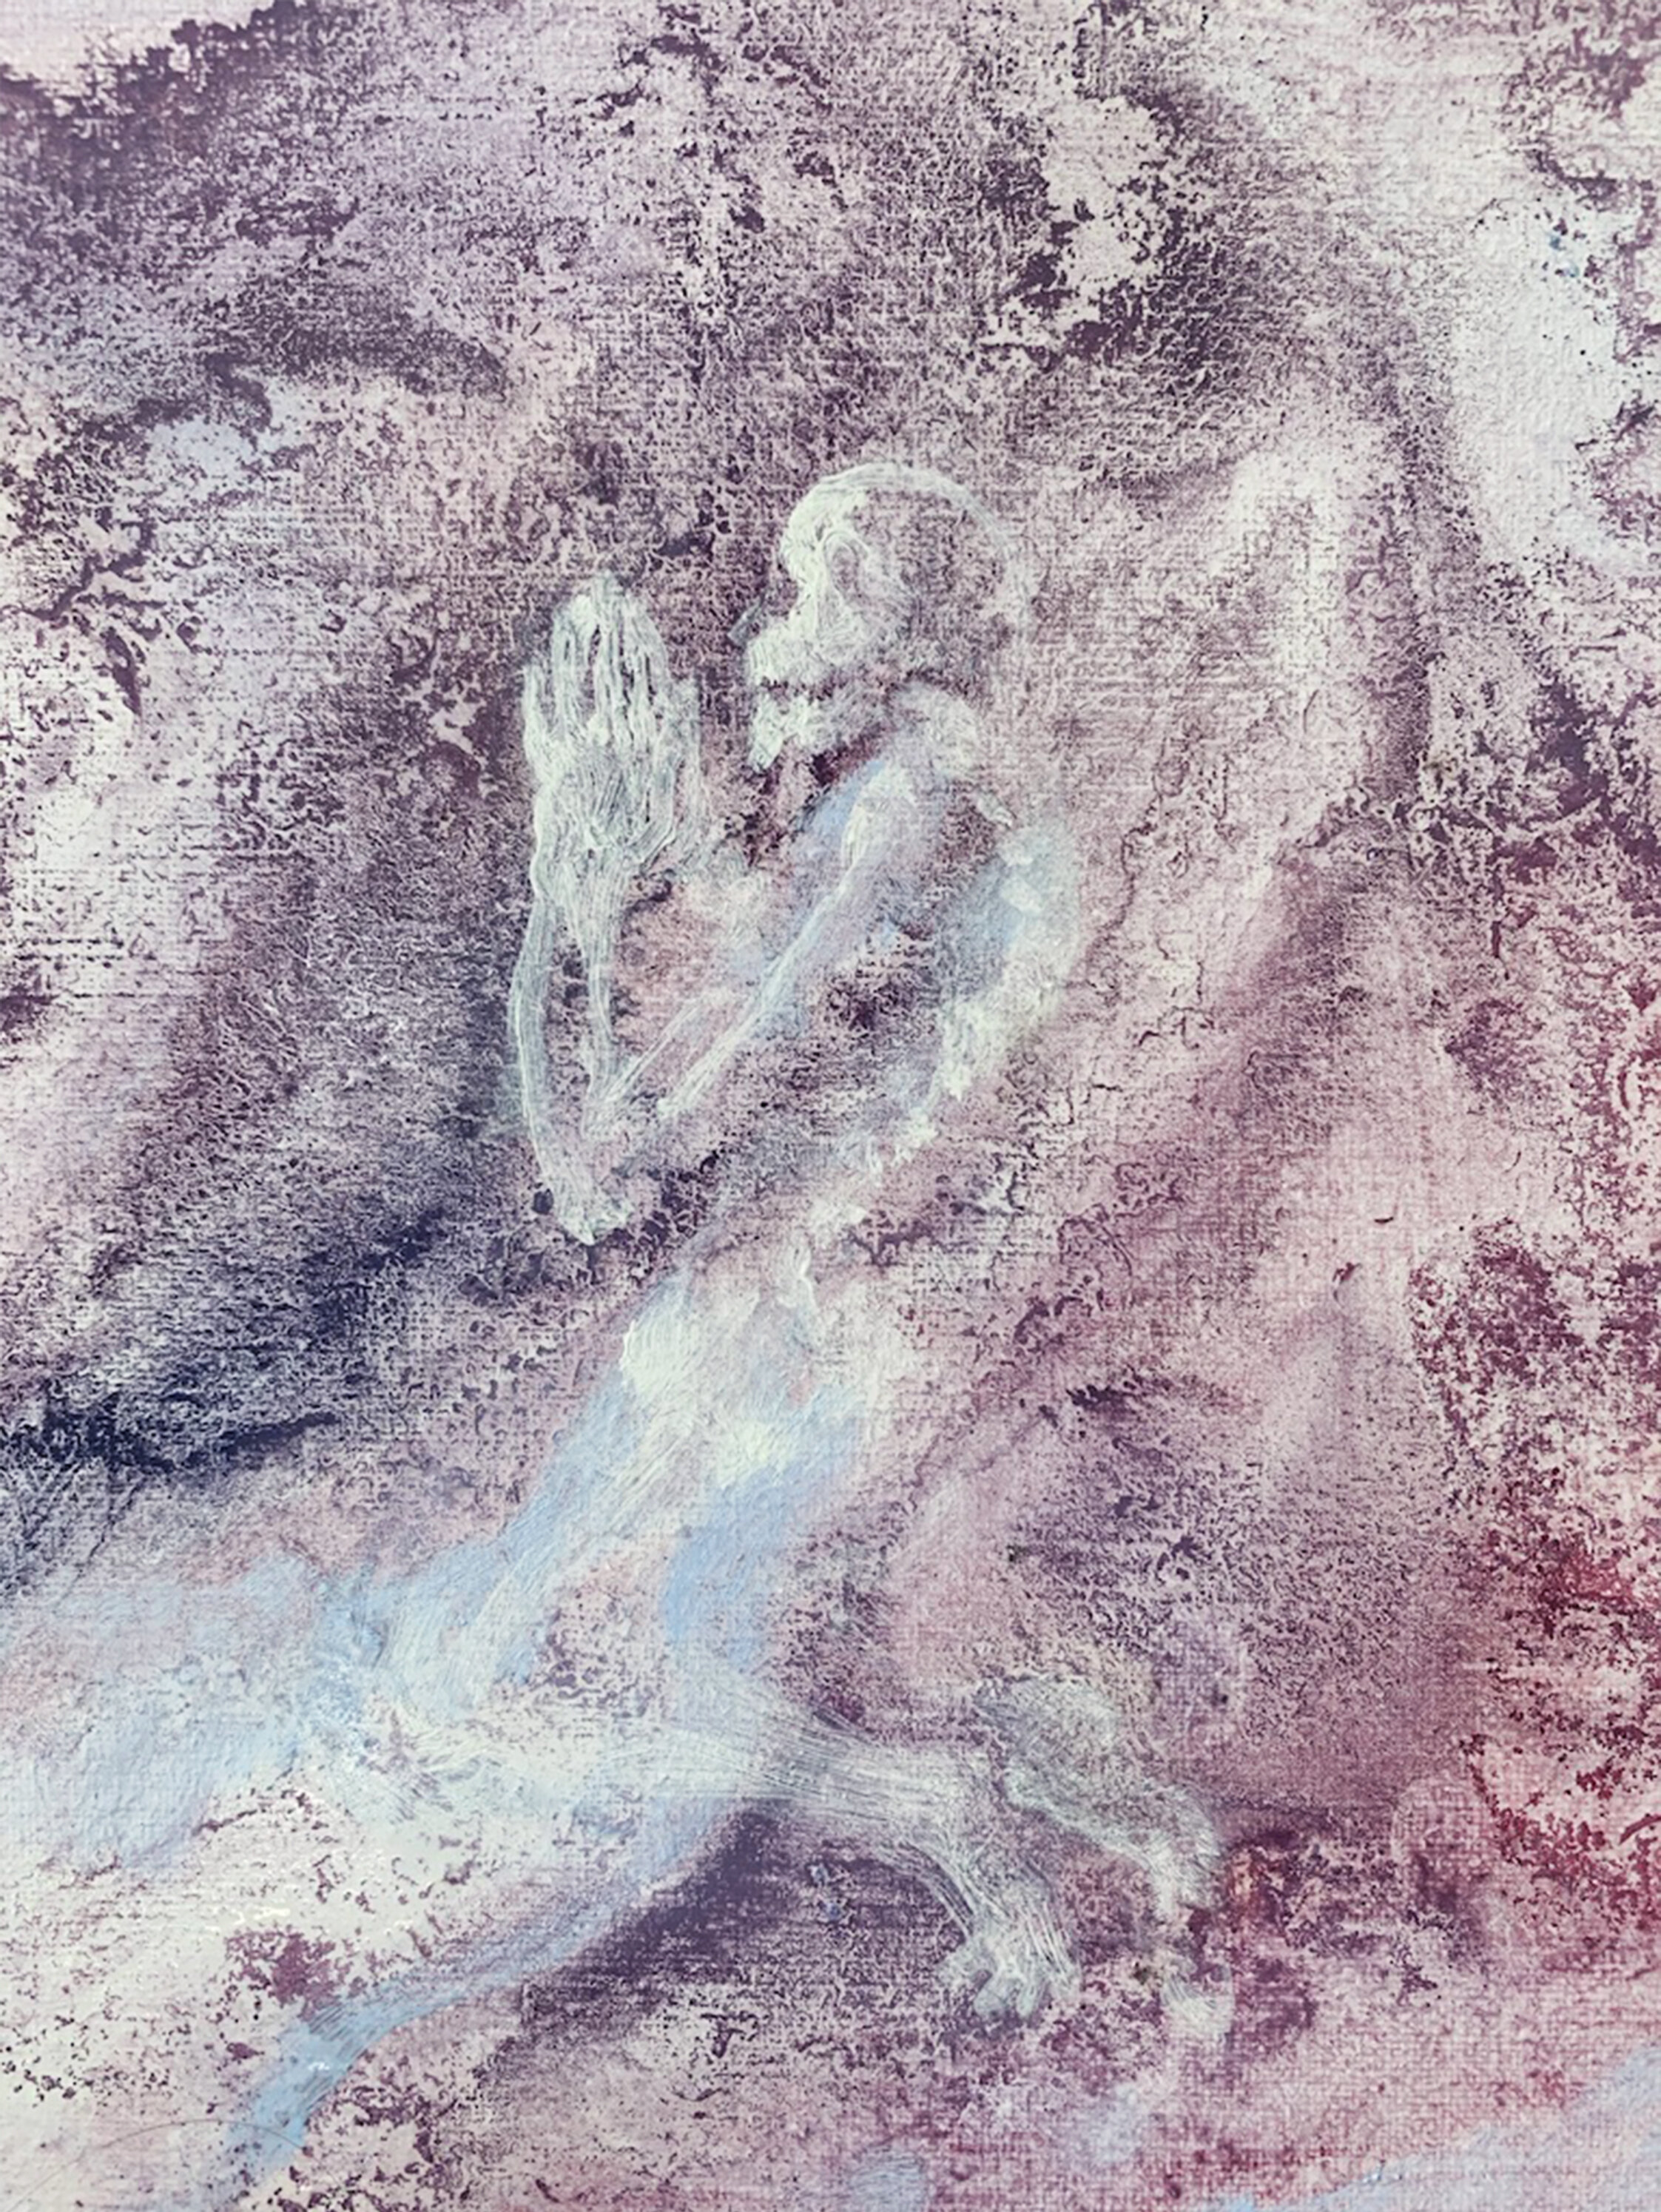  Detail from “Mountaintop Prayer” 